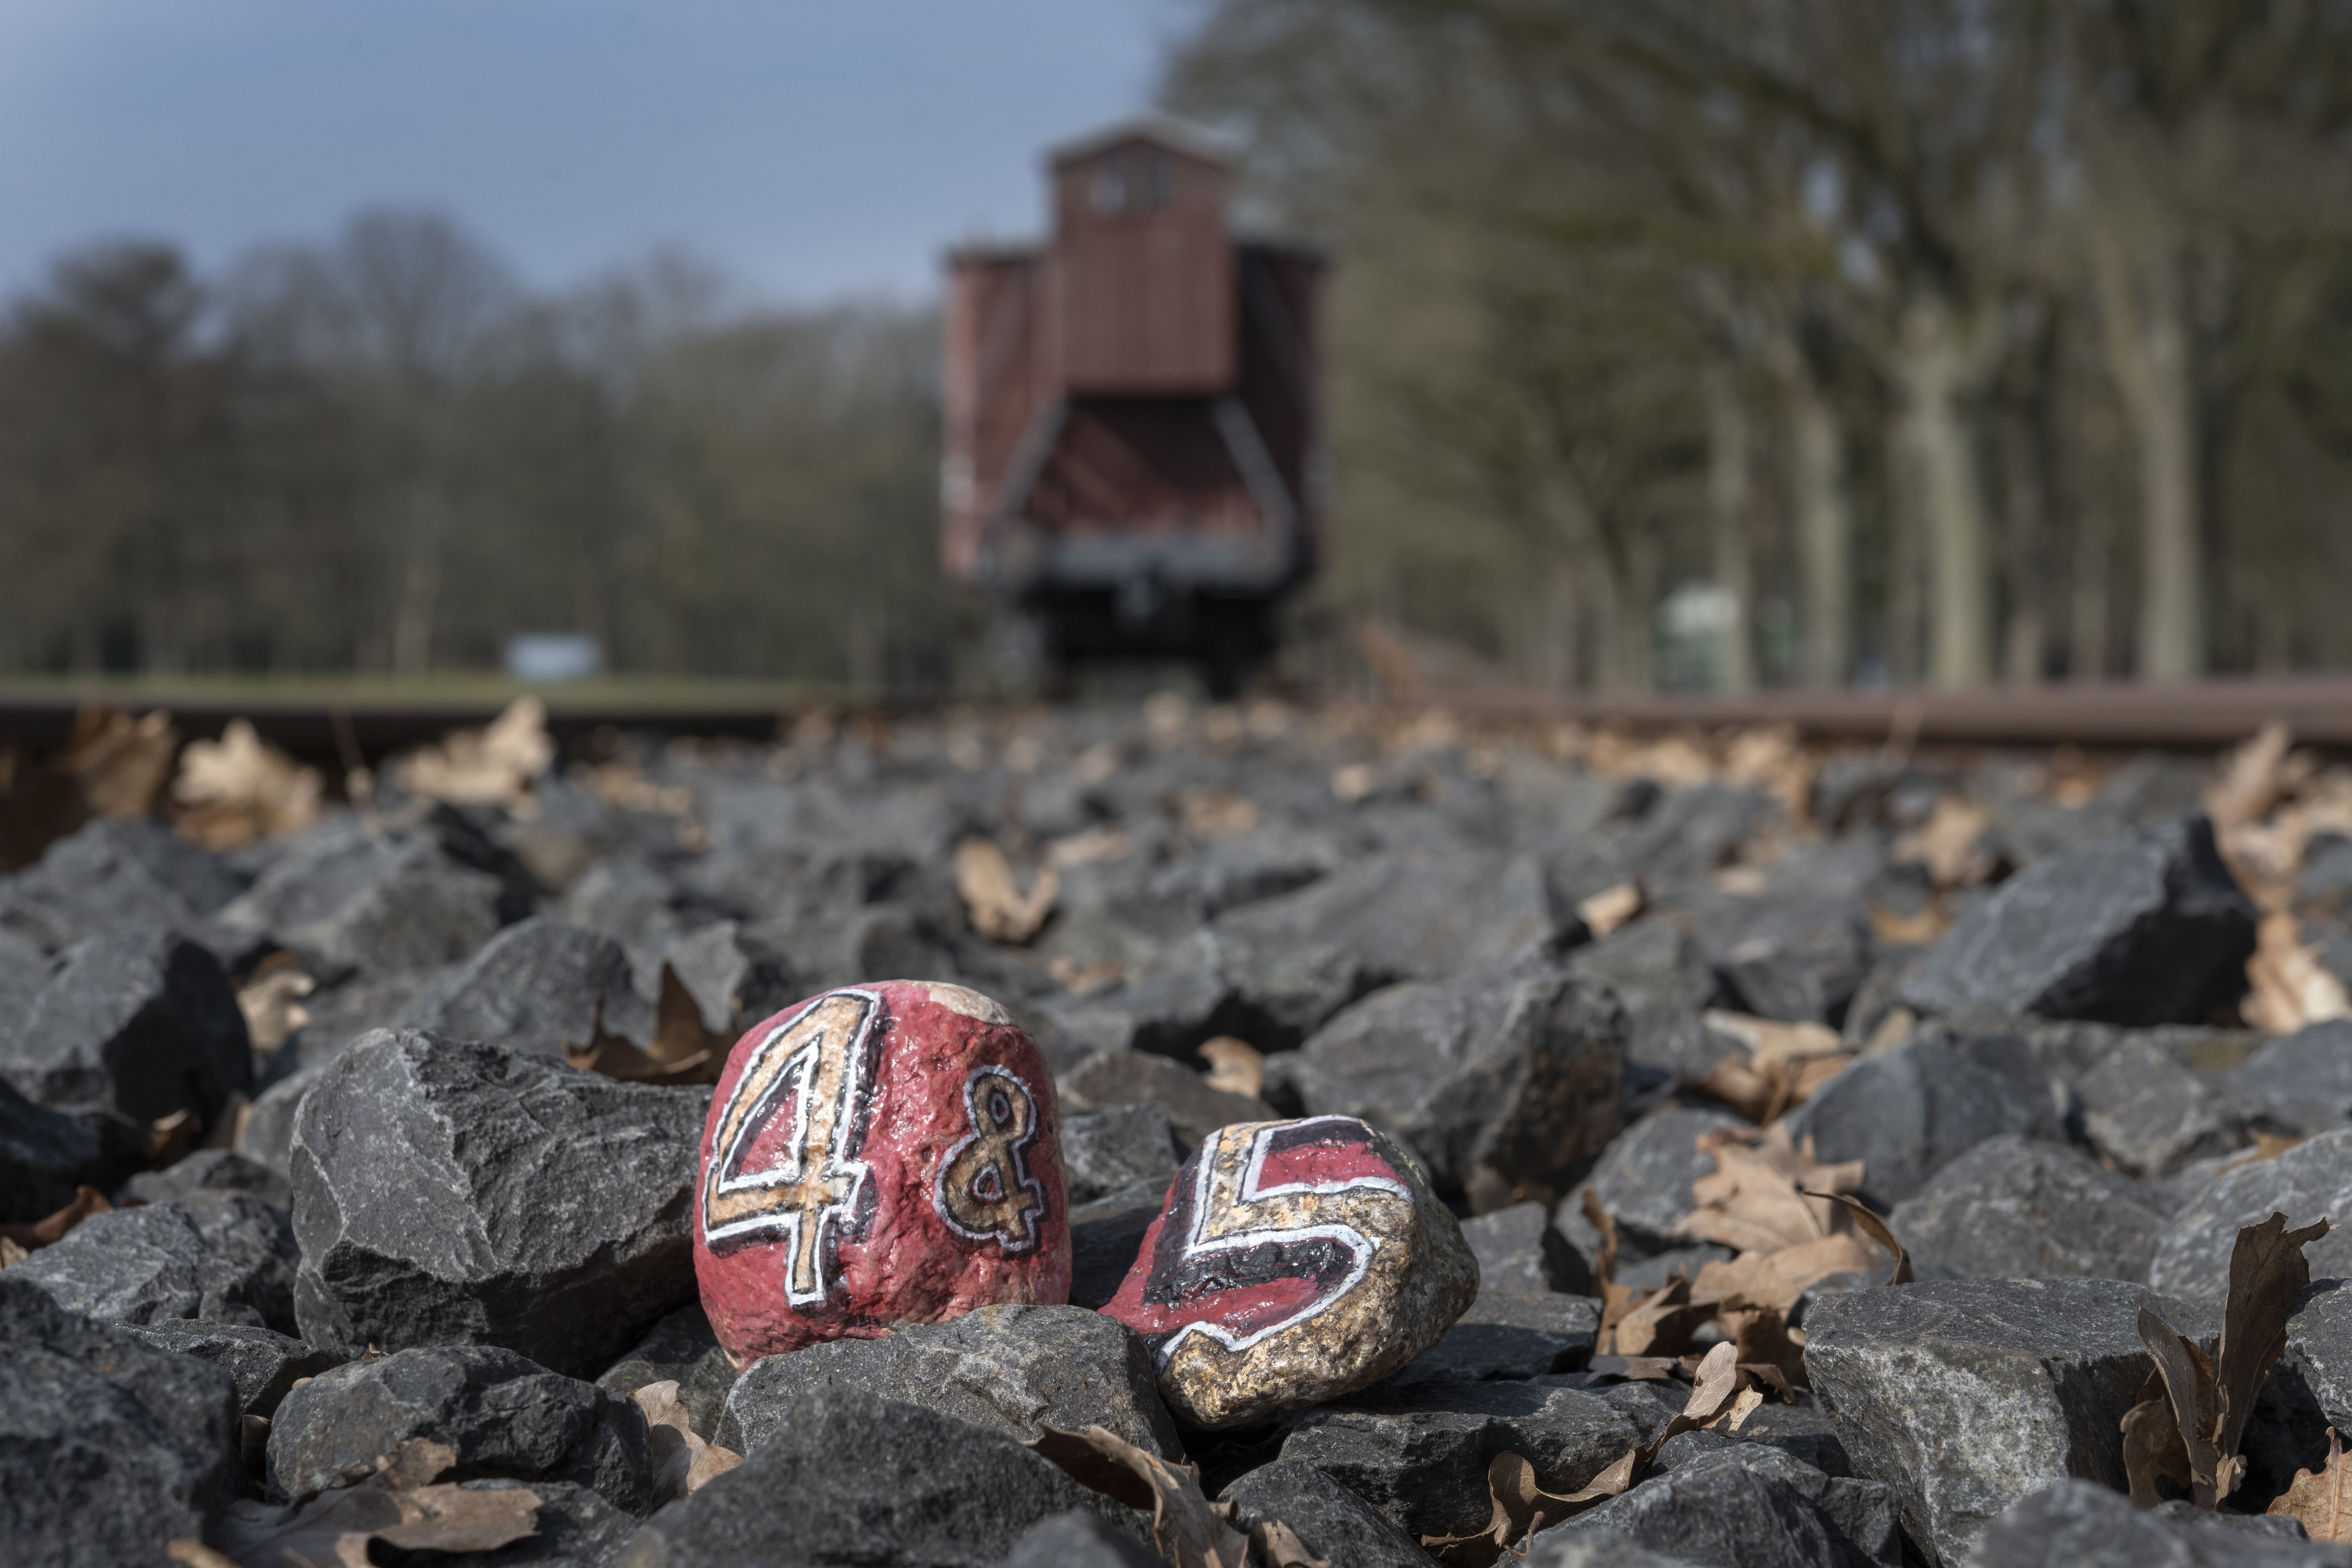 Memory Stone 4 en 5 bij wagons Kamp Westerbork